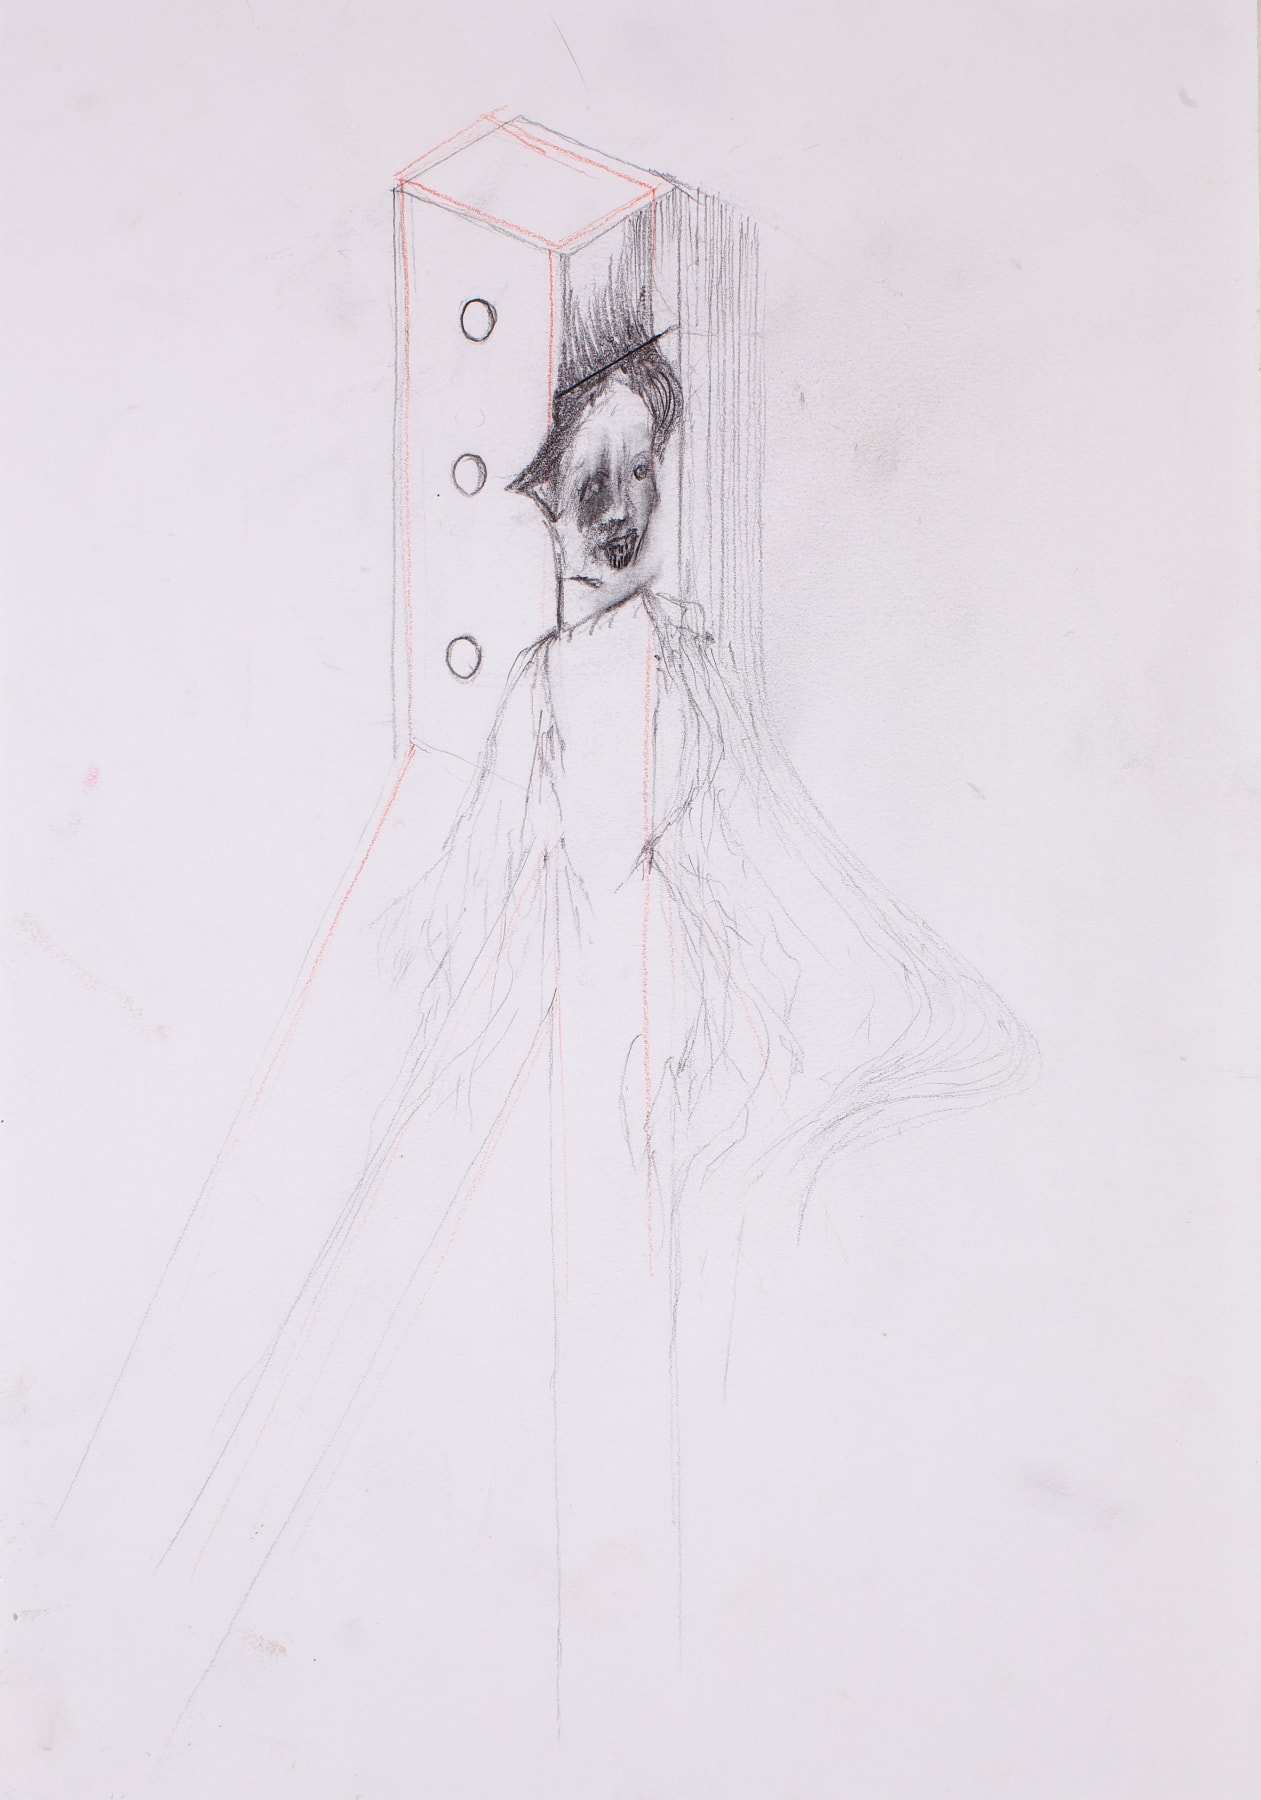 &quot;Untitled&quot;, 2013 Graphite, colored pencil on paper